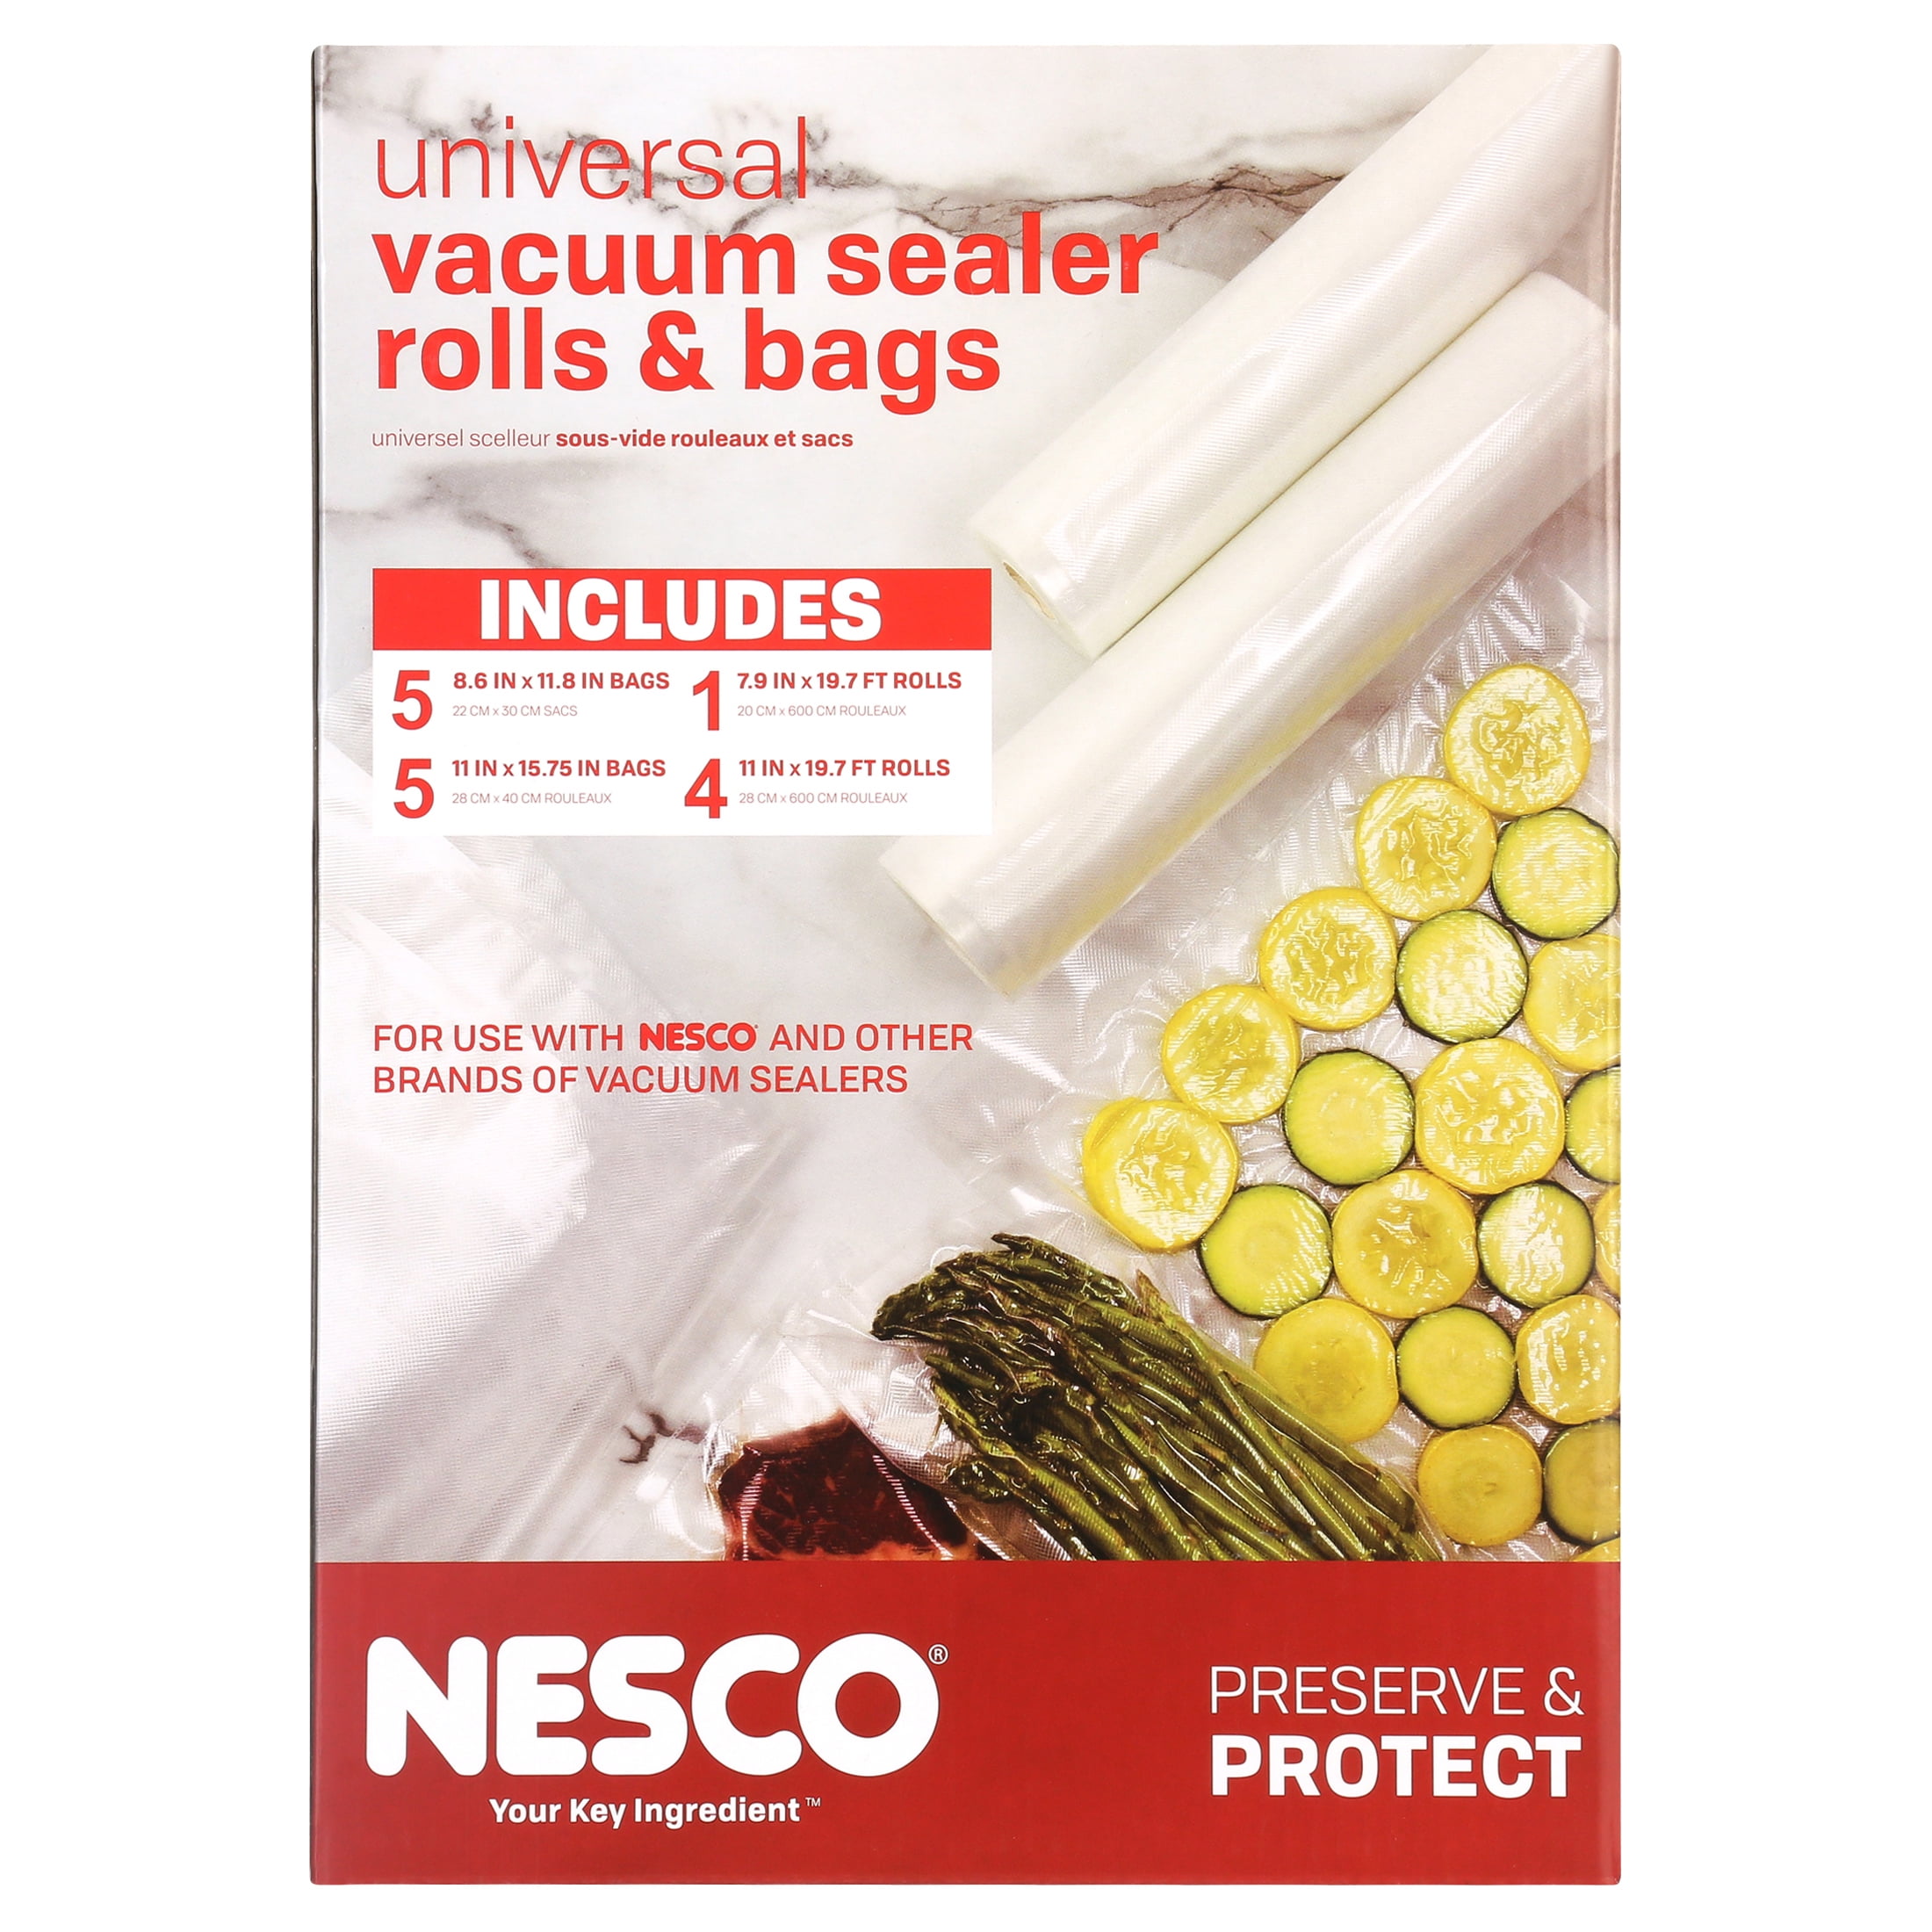 Nesco Vs-05b 50 Count Sealer Bags